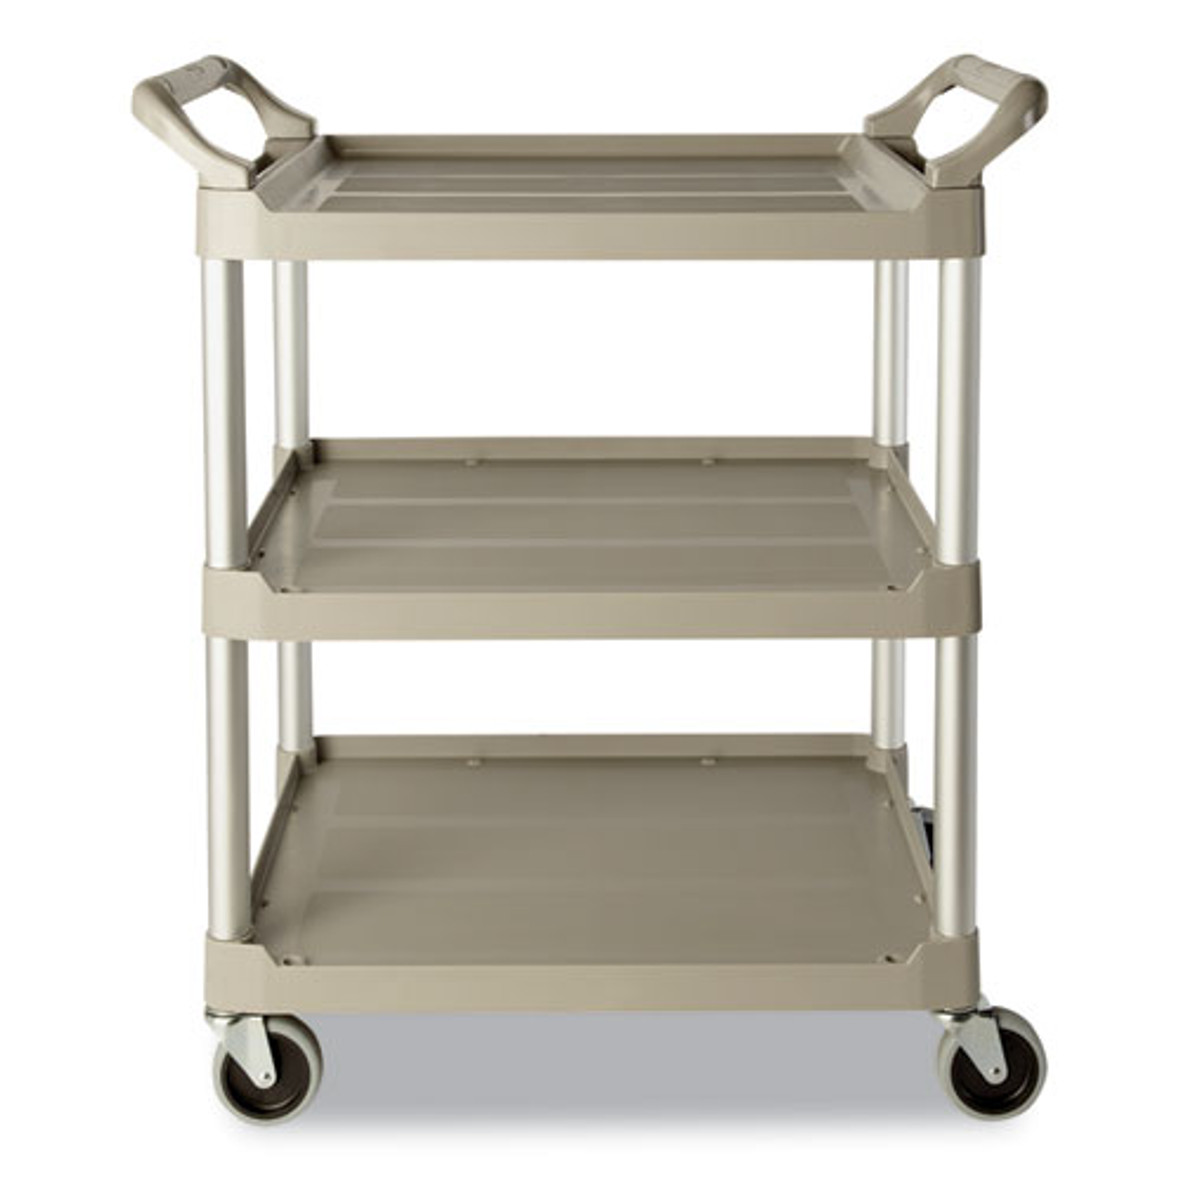 Rubbermaid® Service Cart, 200-lb Capacity, Three-shelf, 18.63w x 33.63d x 37.75h, Off-White (Pack of 1)